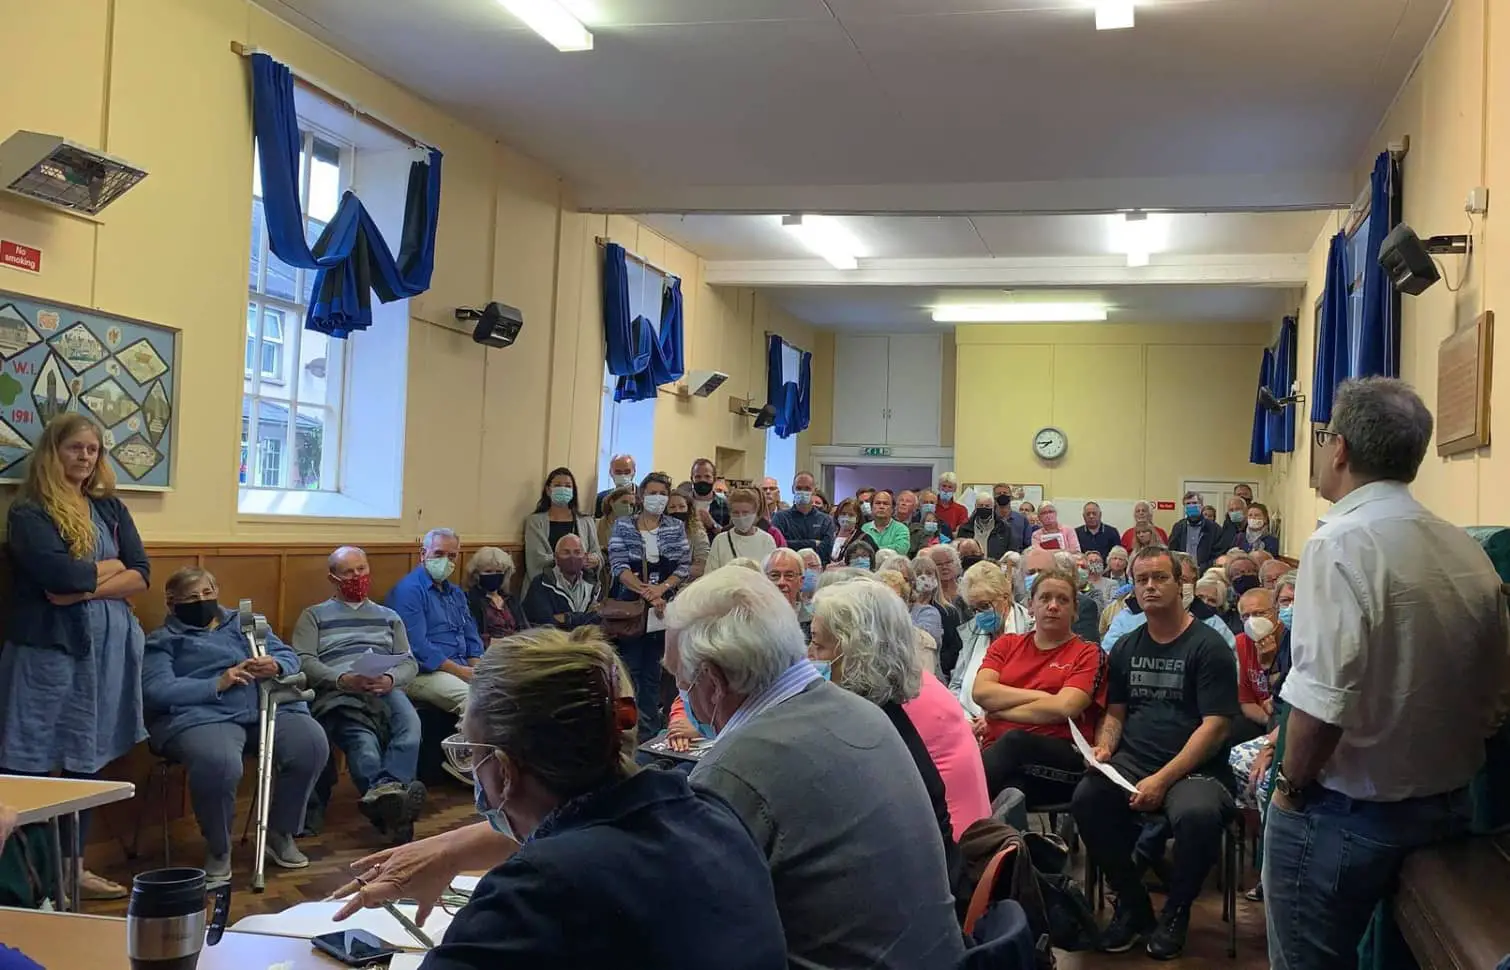 Bob seely speaking at Niton Parish Council Meeting